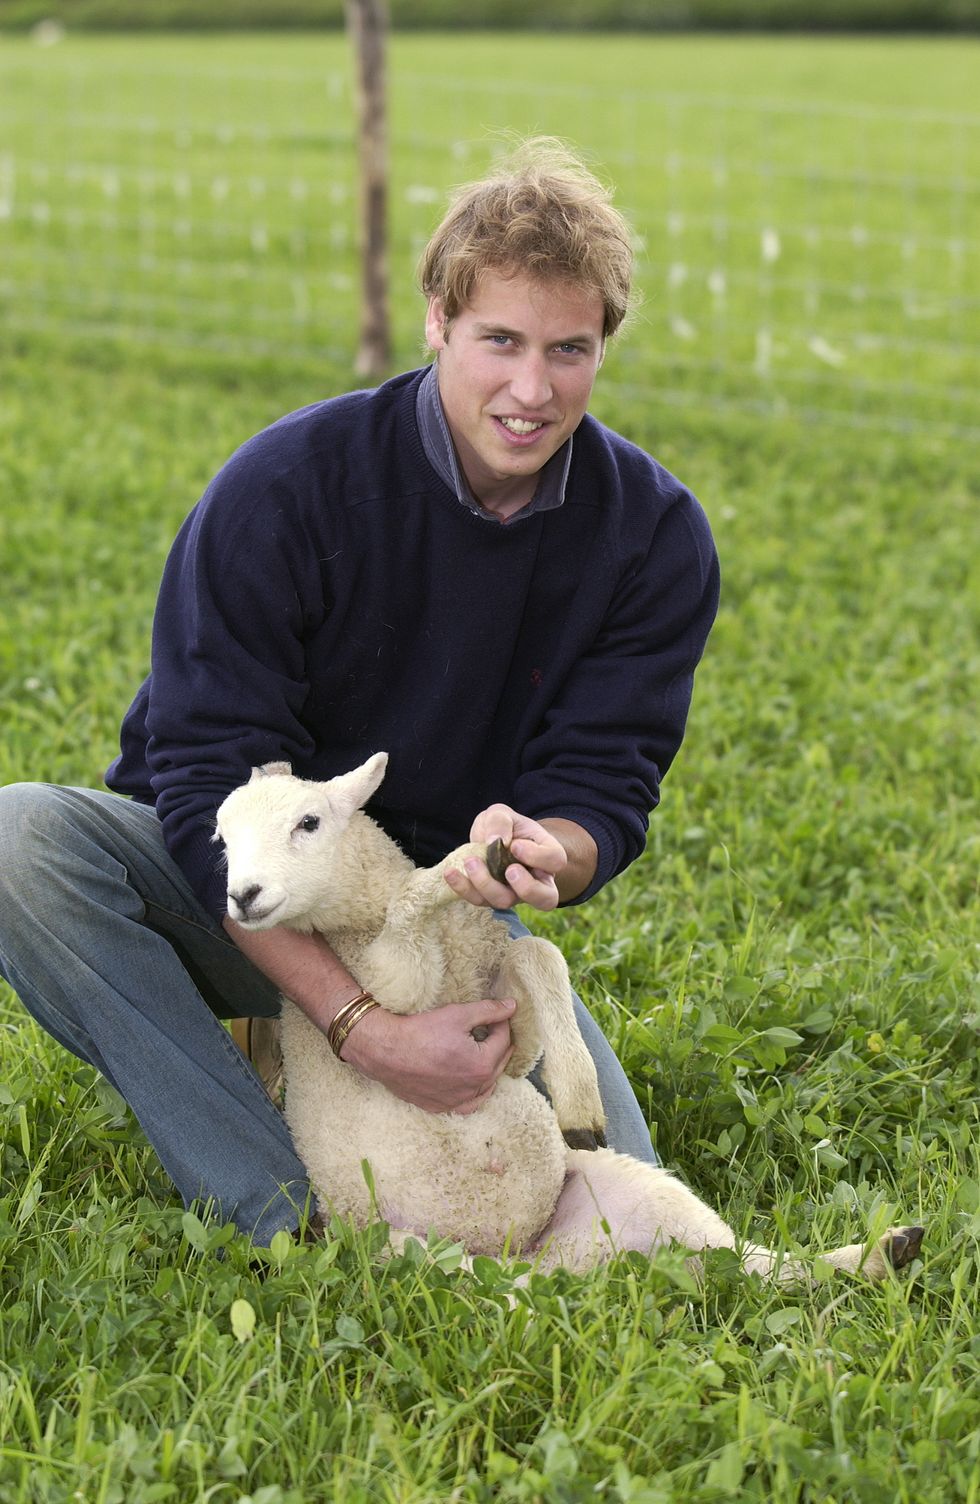 william holds sheep